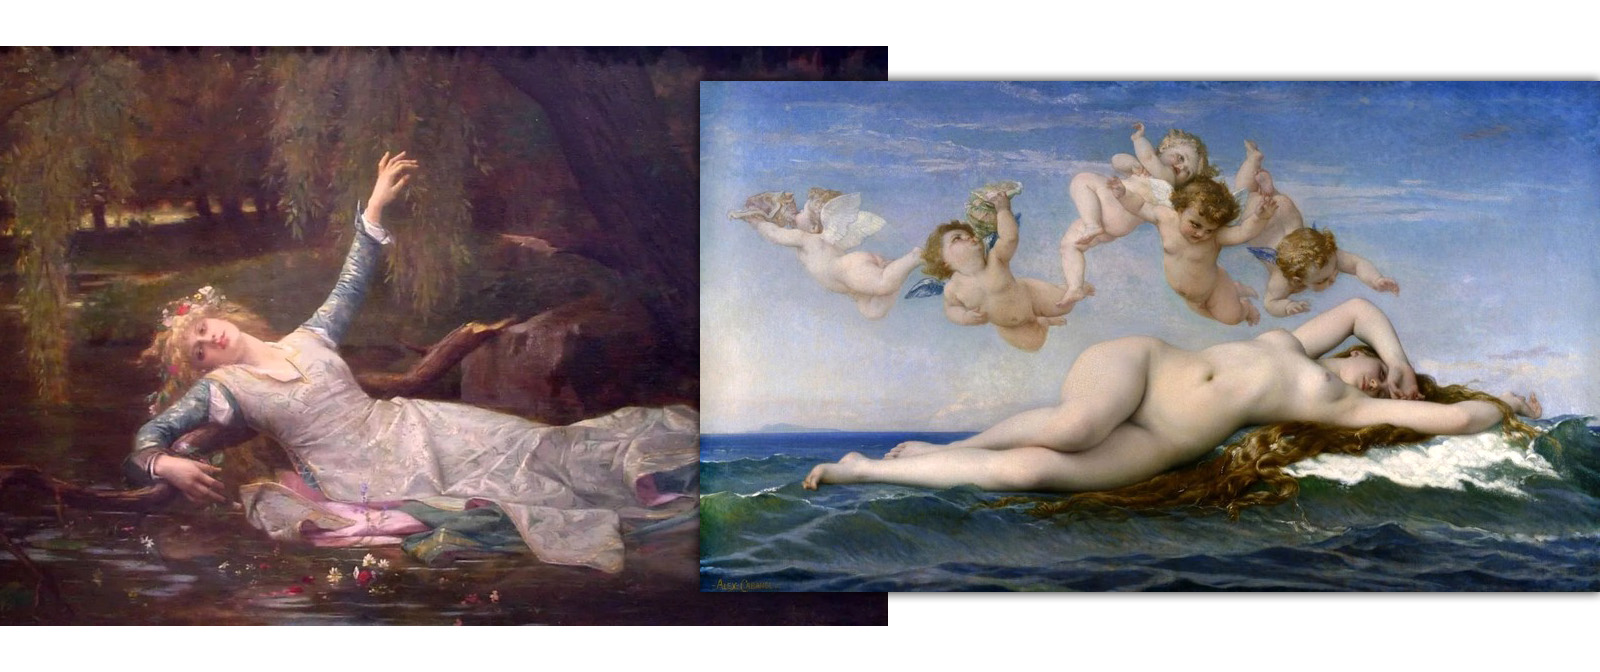 Обнажённые богини на картинах академиста Александра Кабанеля. Когда красота решает всё